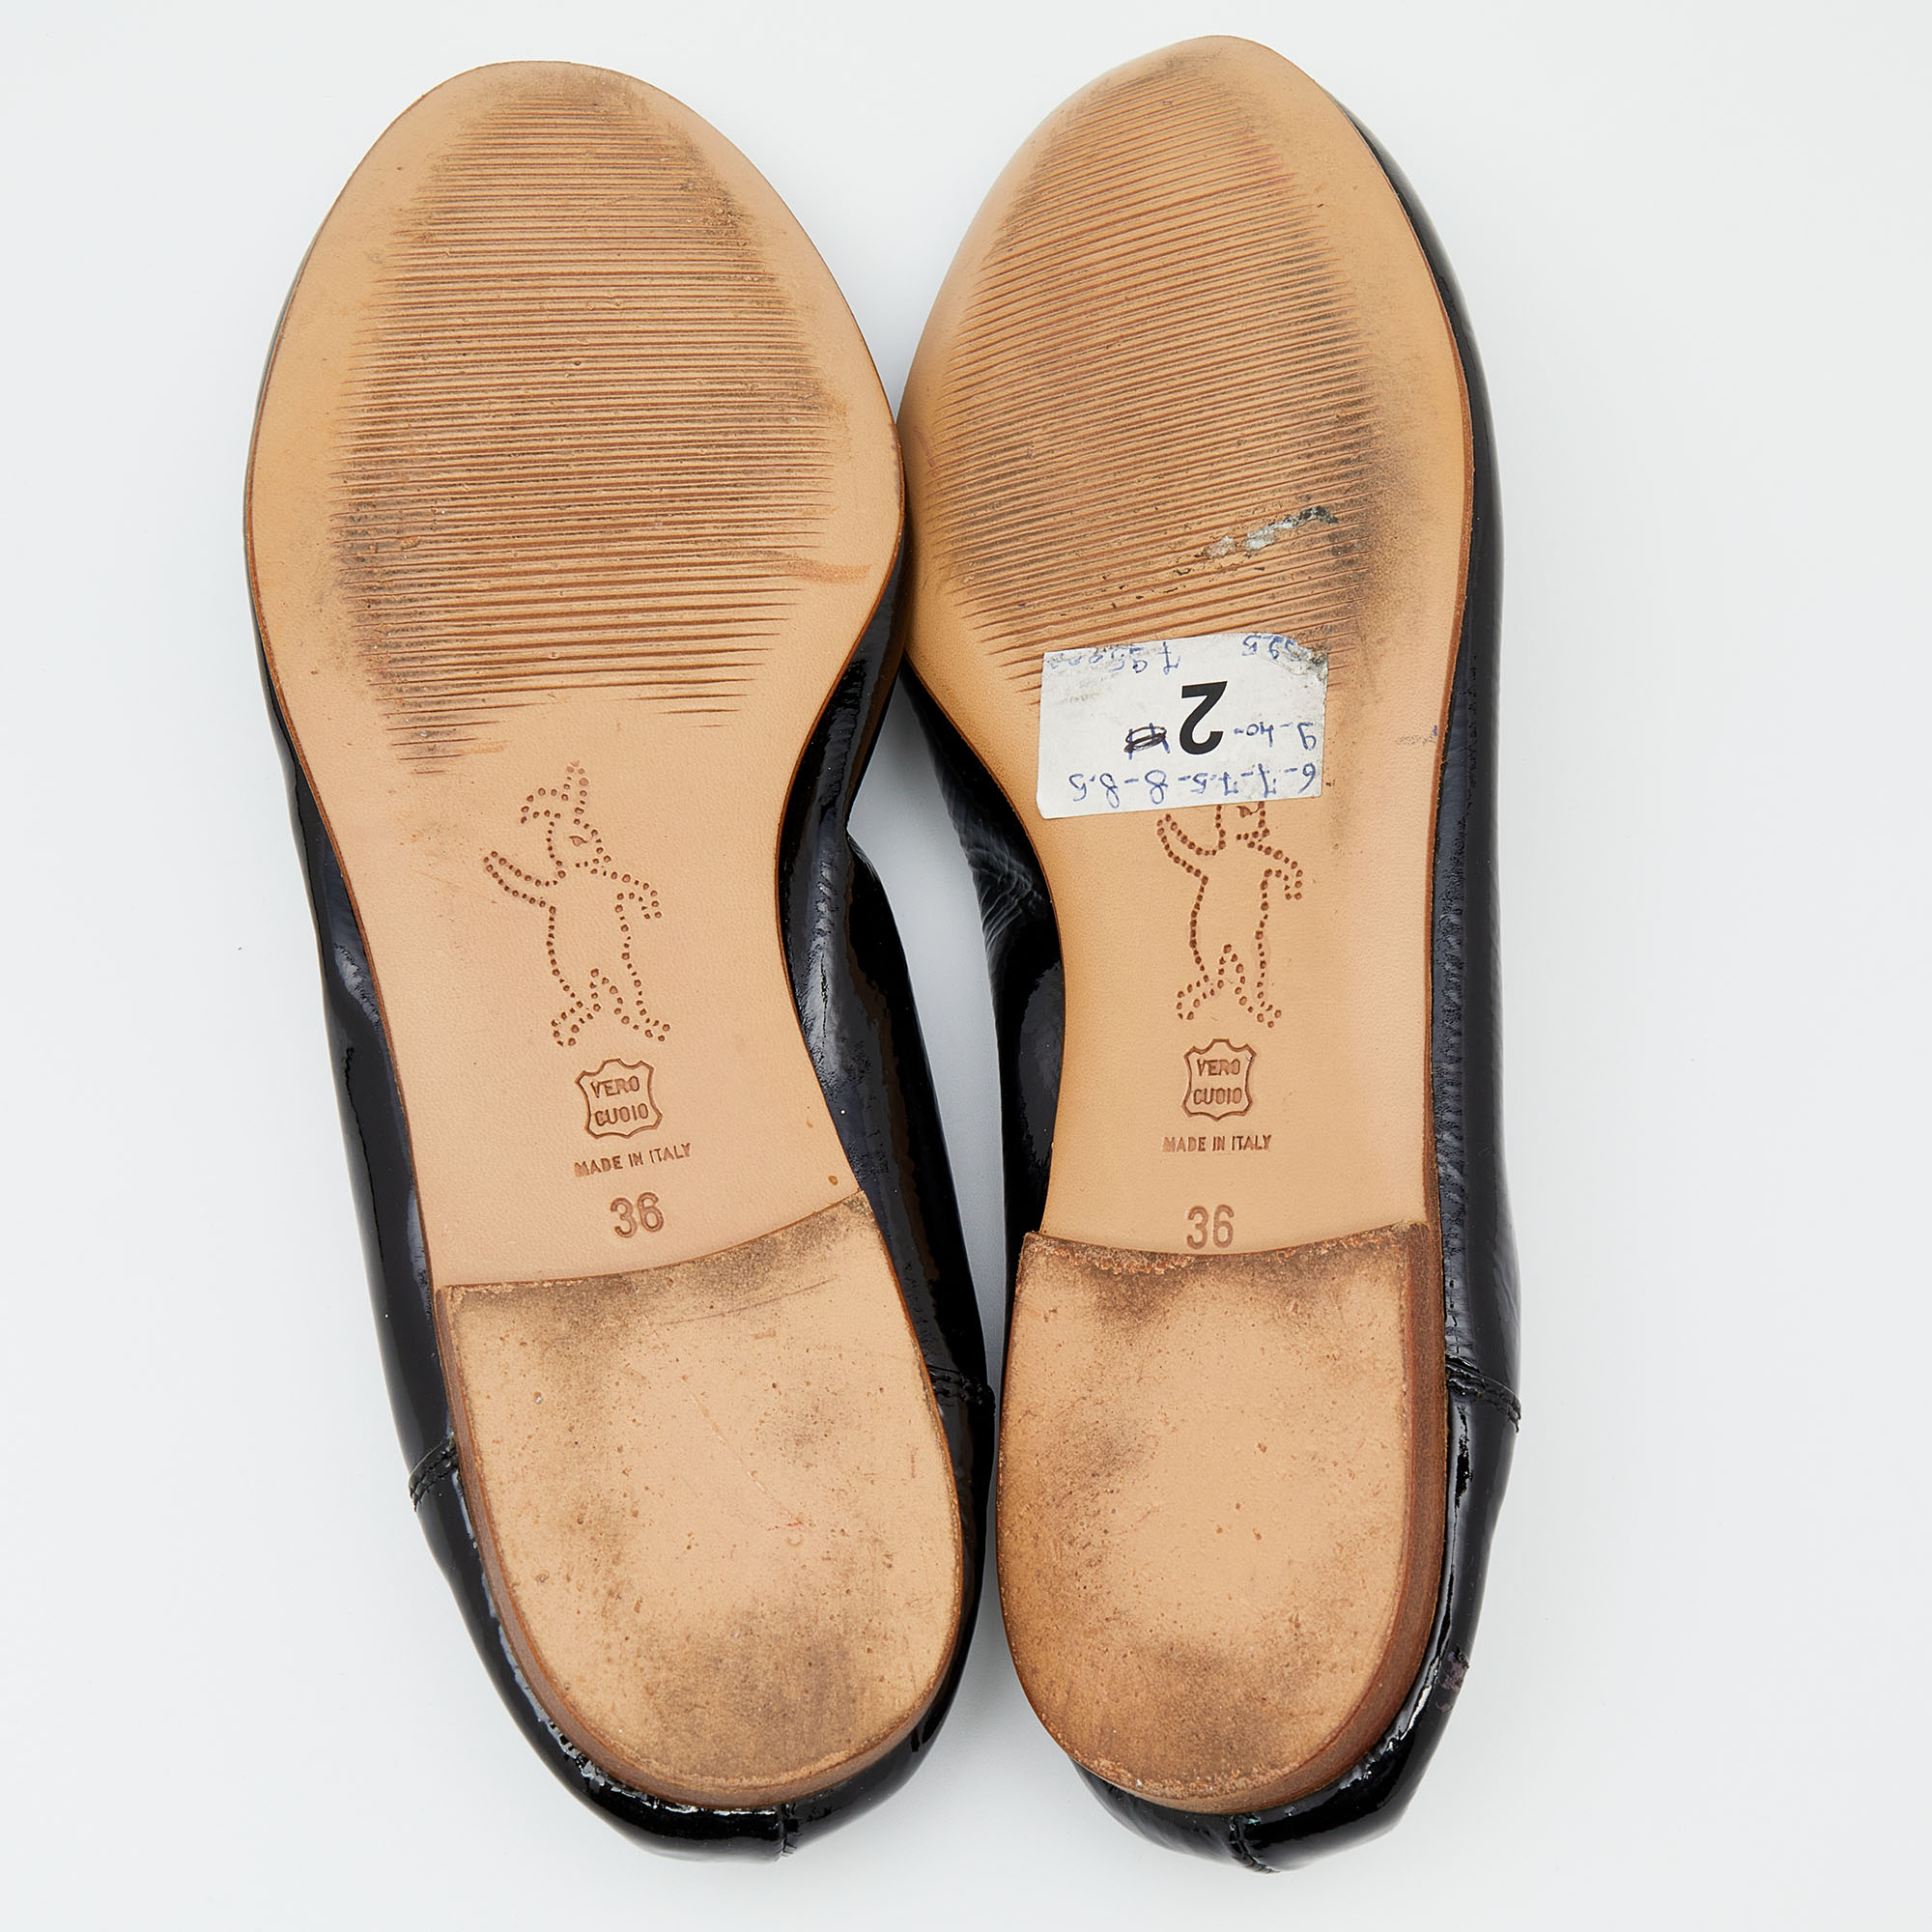 Marni Black Patent Leather Scrunch Ballet Flats Size 36